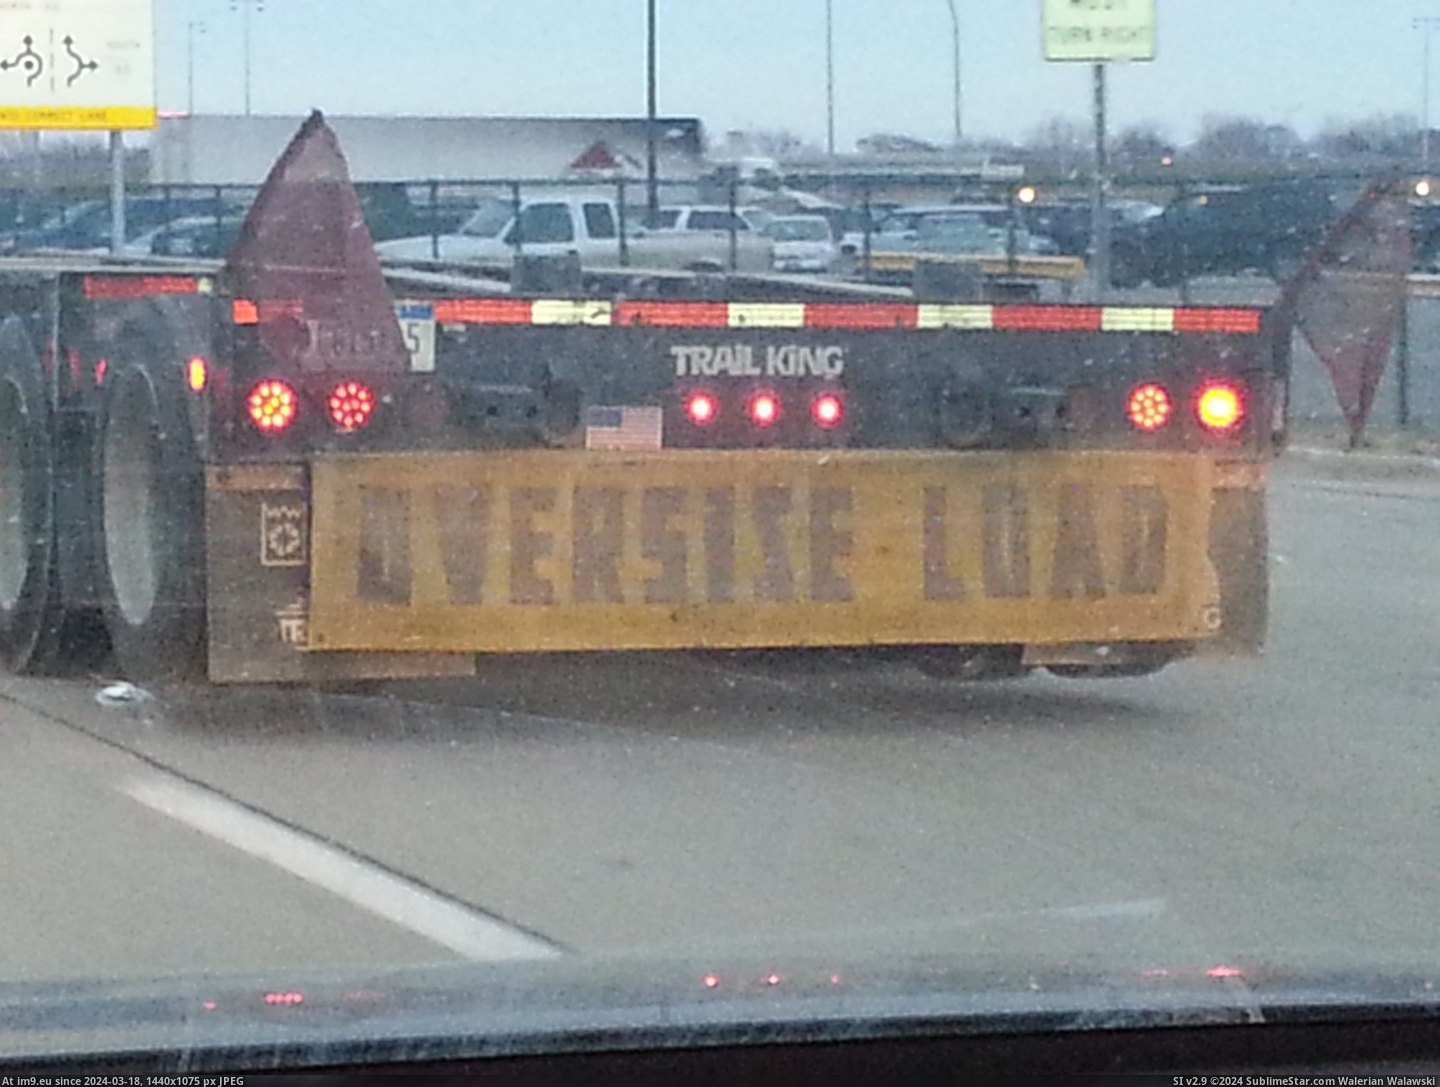 #Load #Oversized #Thinks [Mildlyinteresting] The 'z' on this 'Oversized load' sign thinks its an 's'. Pic. (Bild von album My r/MILDLYINTERESTING favs))